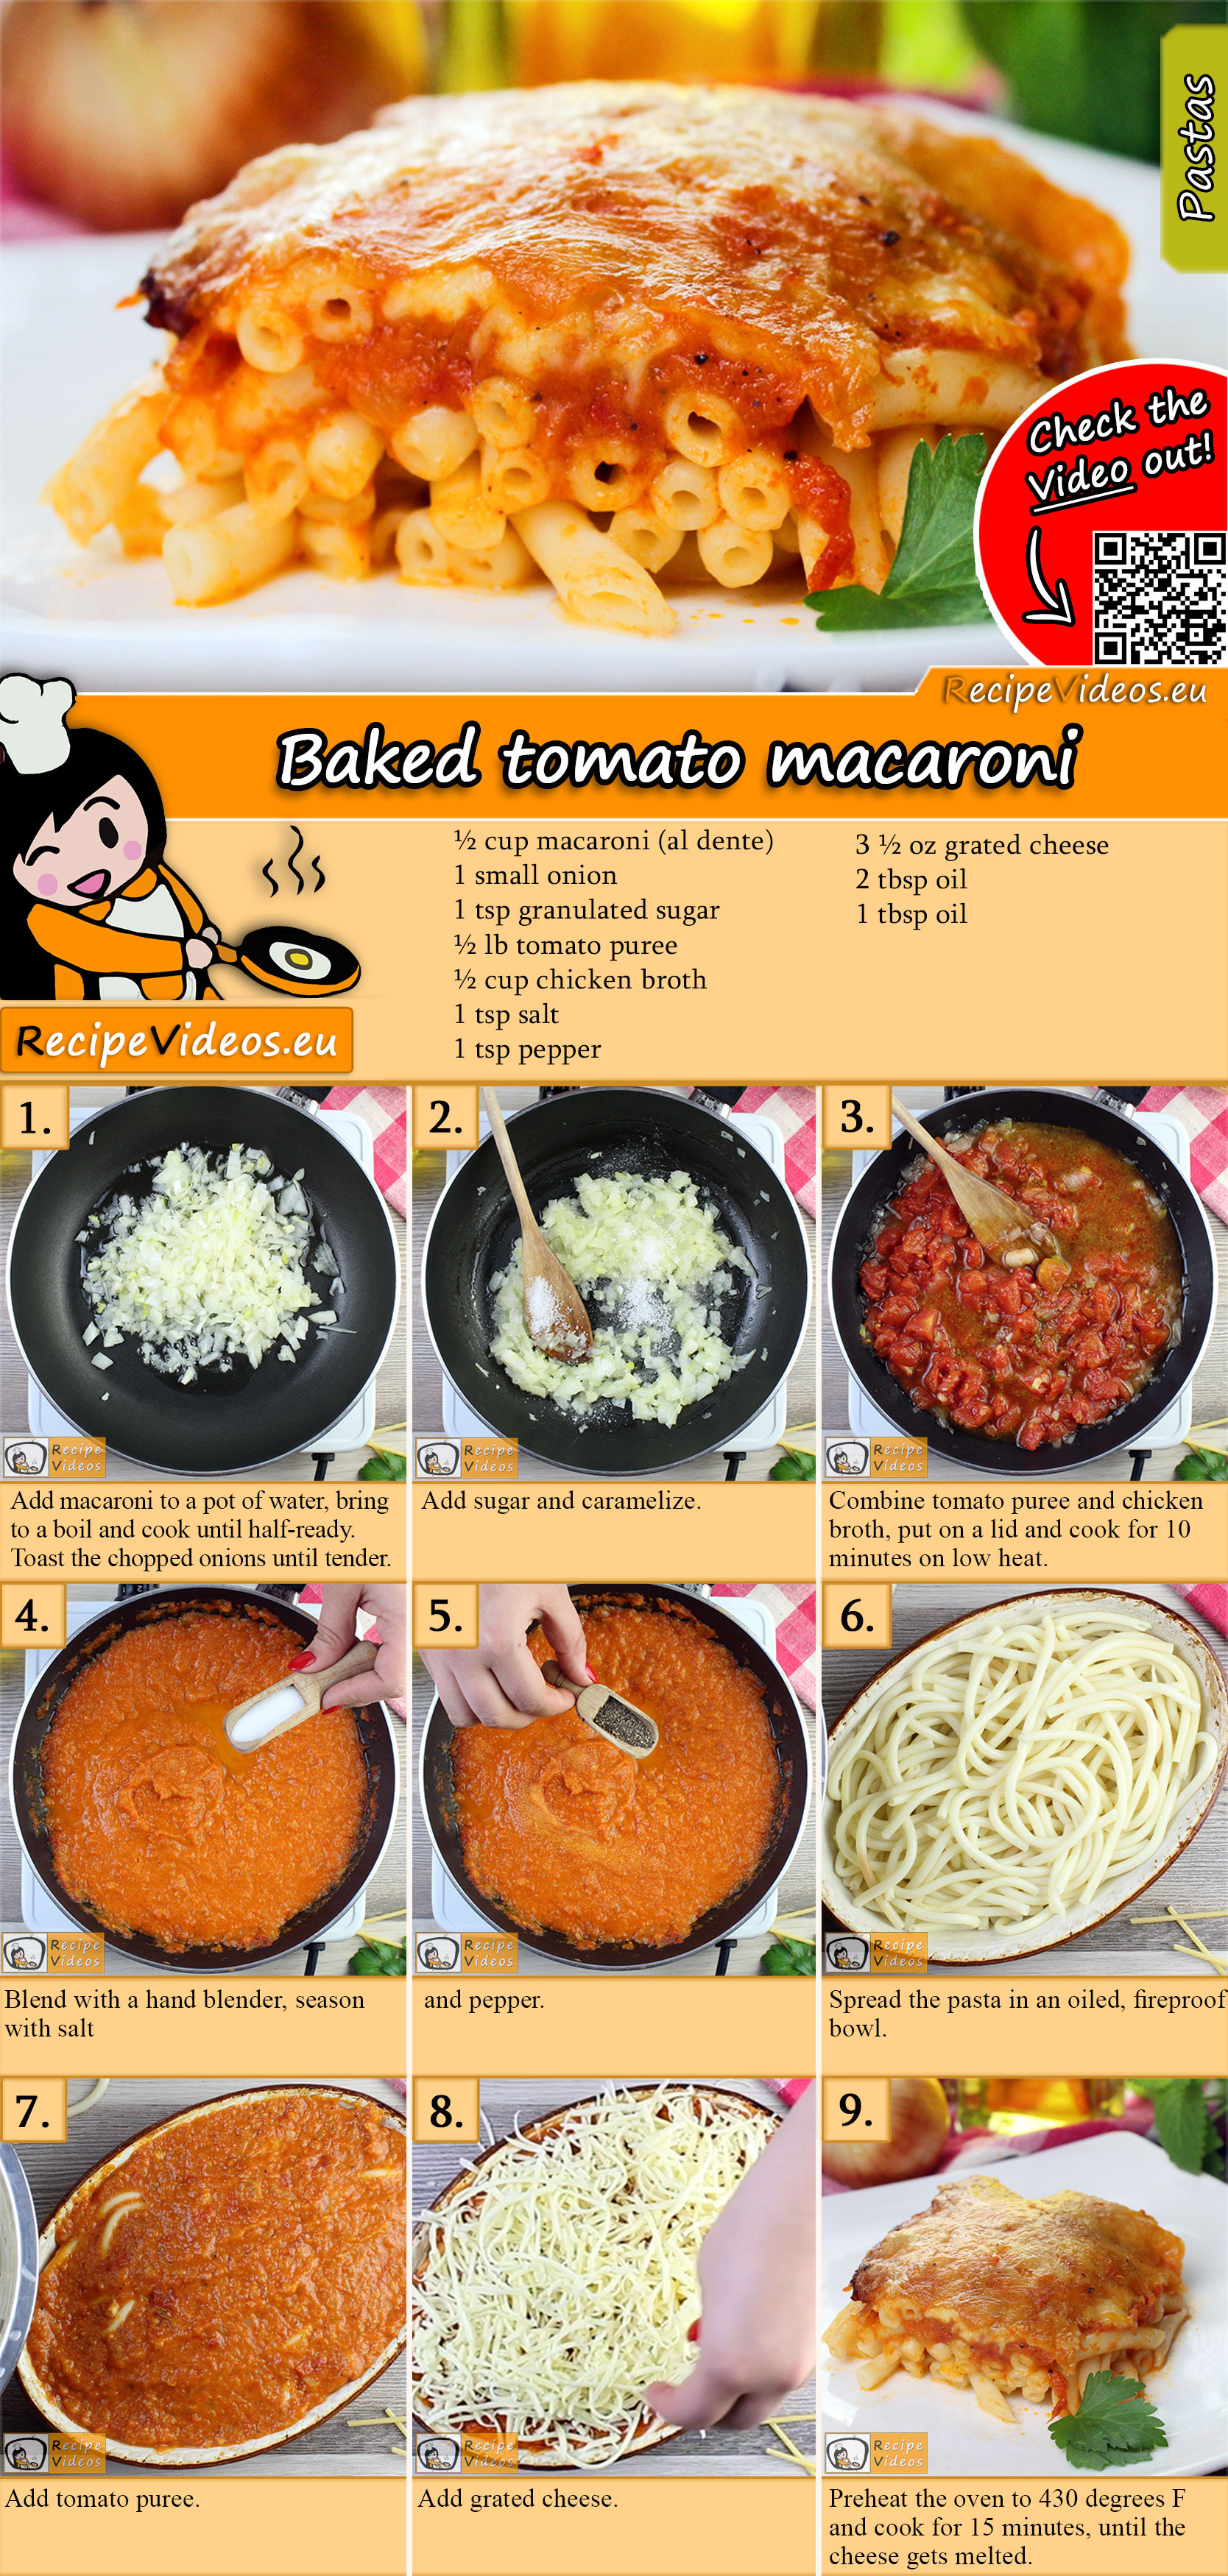 Baked tomato macaroni recipe with video